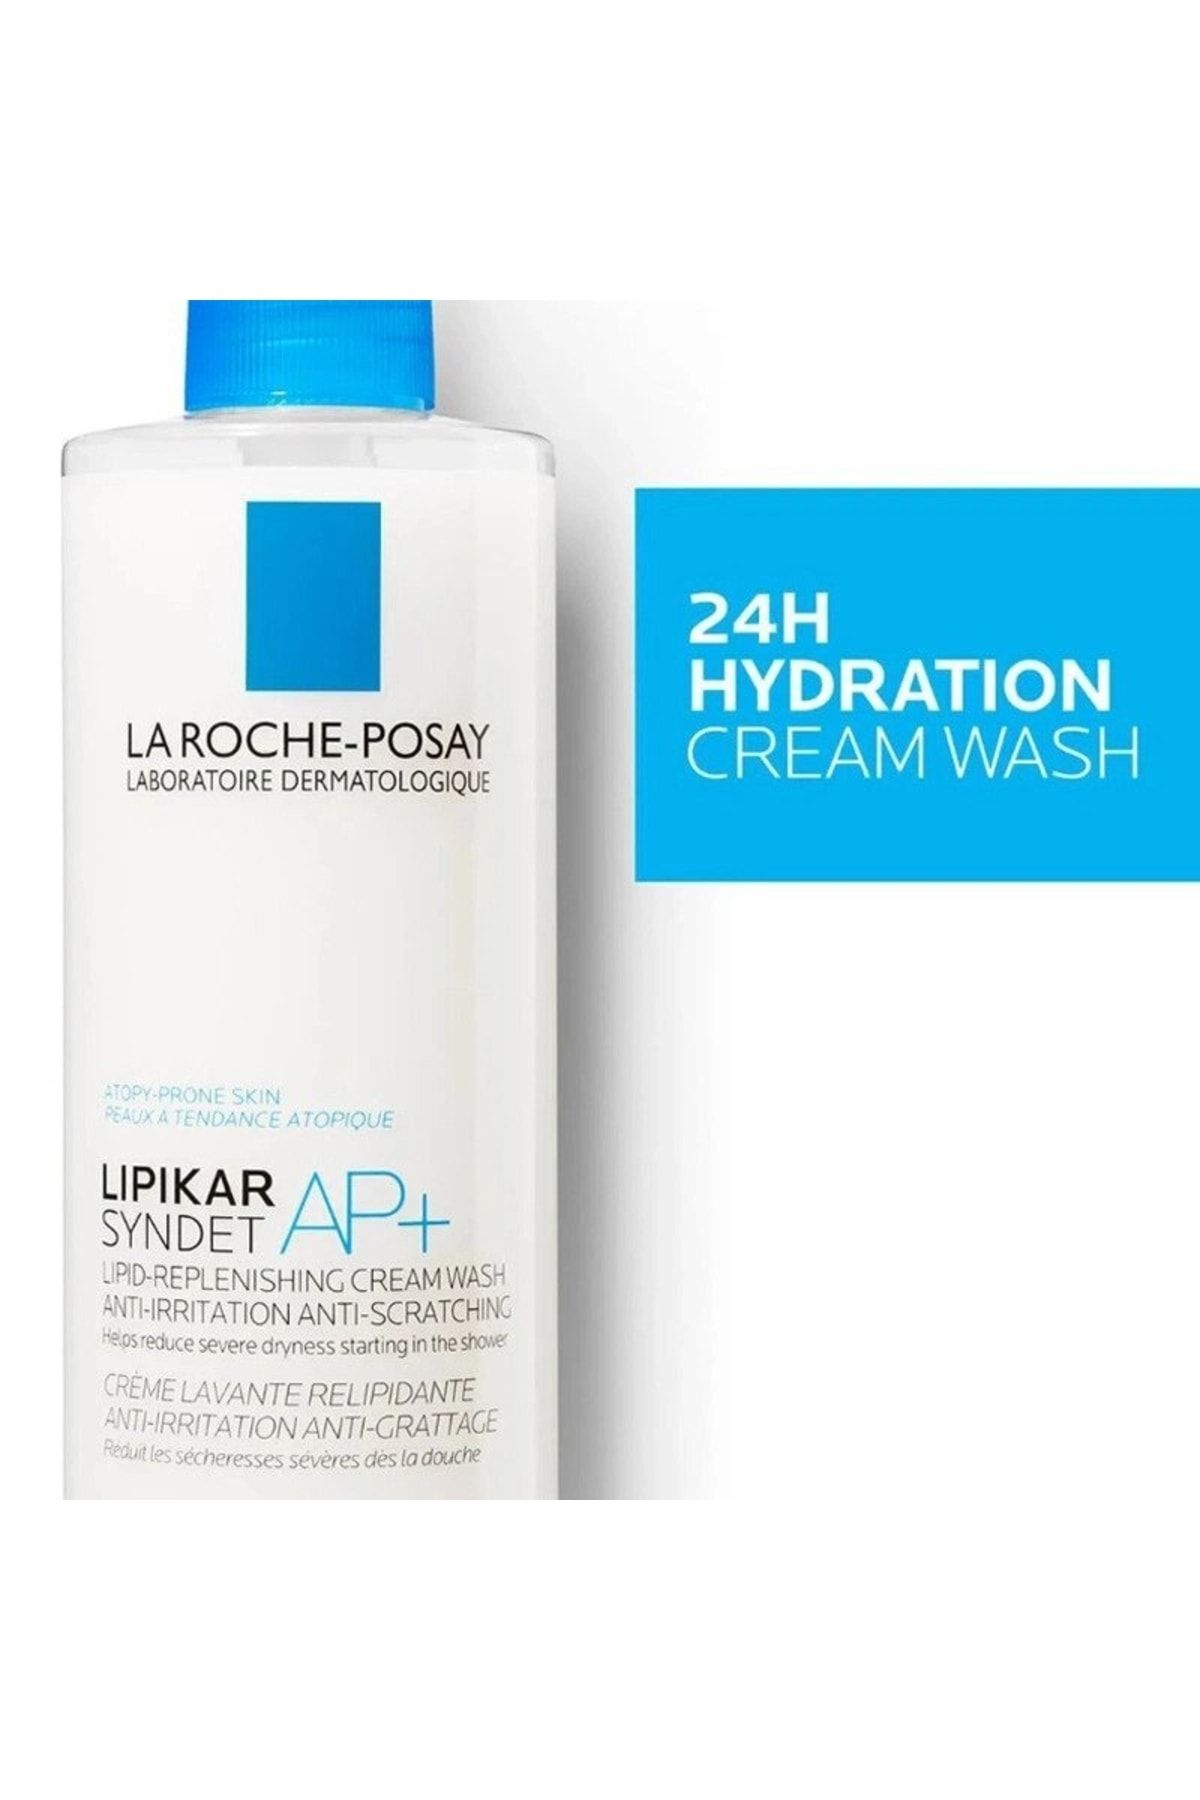 La Roche Posay ژل شستشوی صورت و بدن لیپیکار سیندت AP+ برای پوست خشک و حساس 400 میلی لیتر